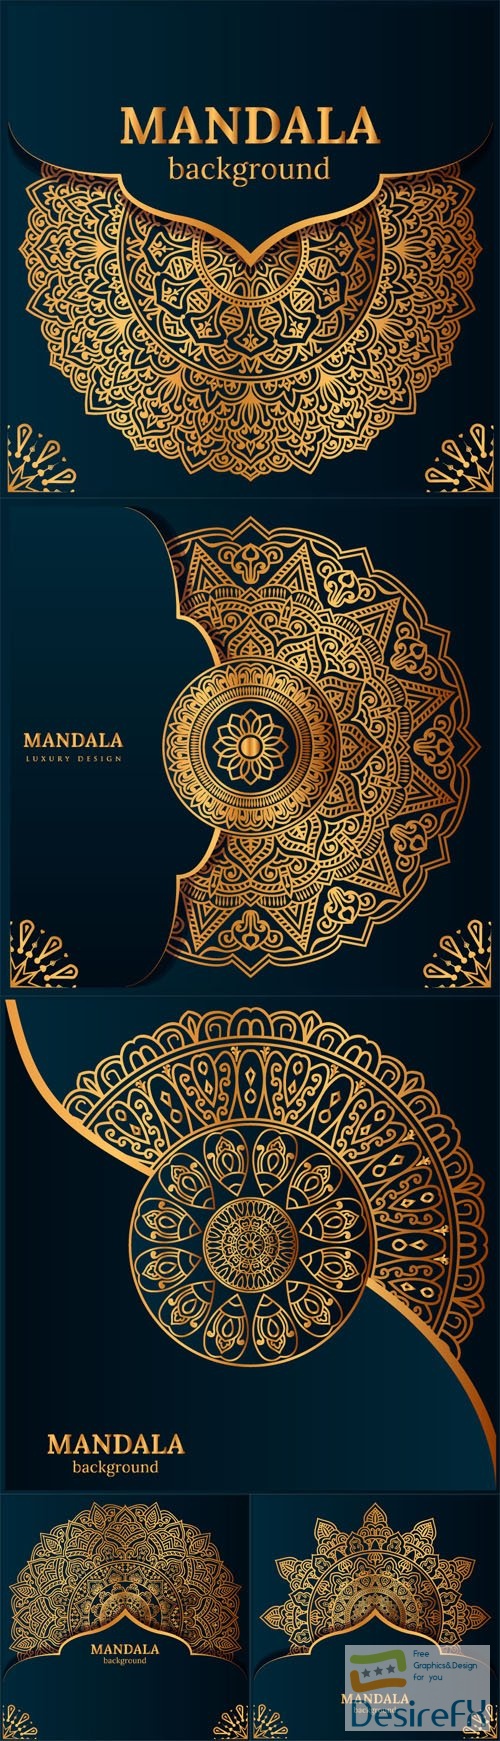 Luxury Mandala Backgrounds Pack - Vector Design Templates